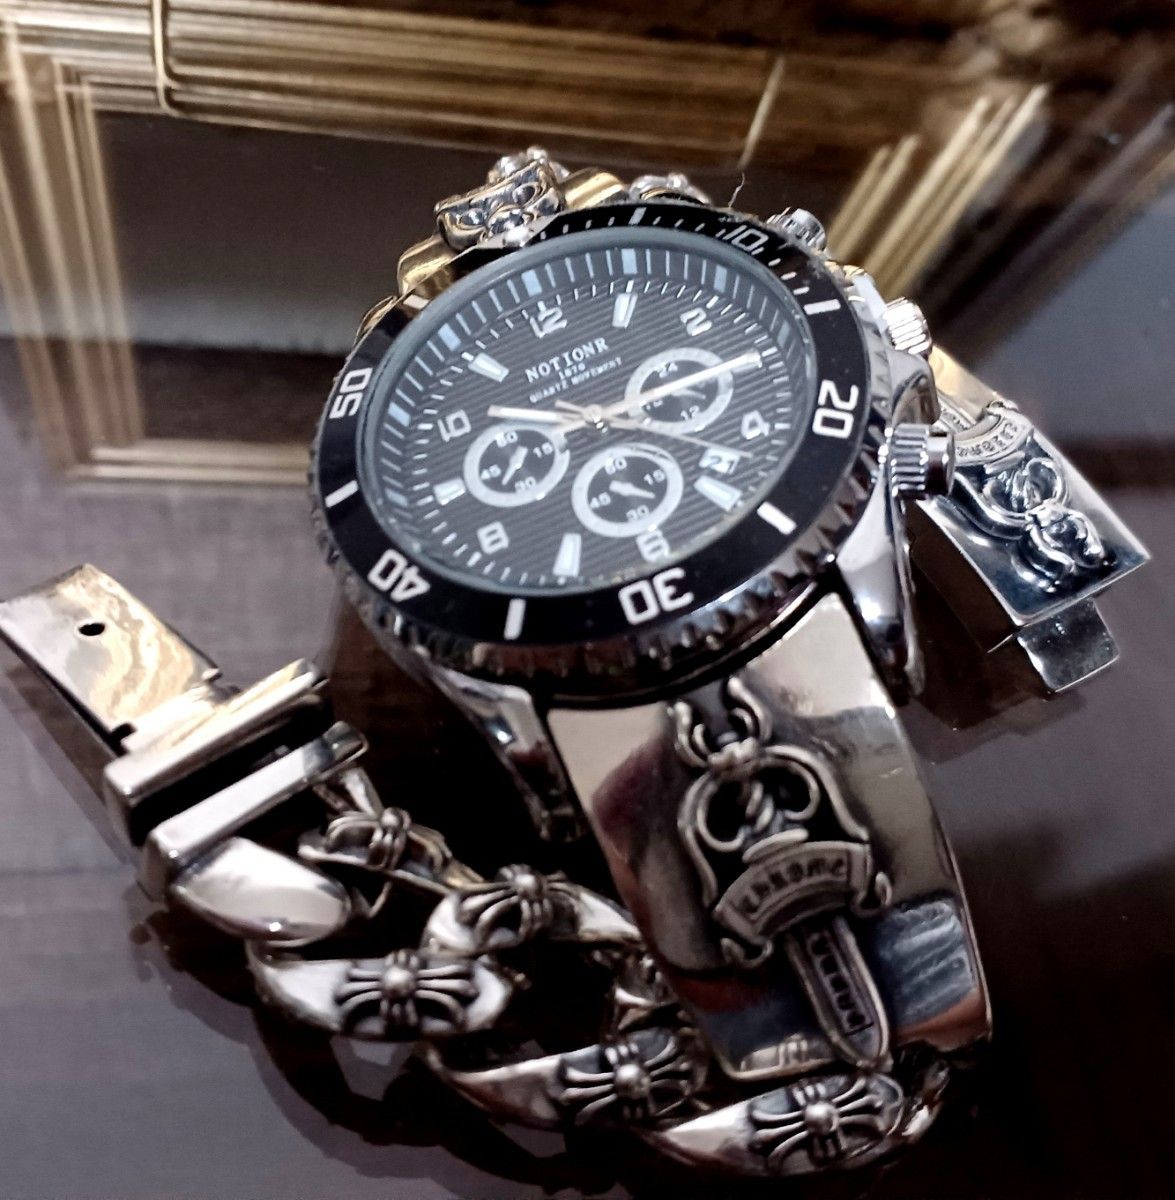 【notionr】 ウォッチブレスレット / ダガー デザイン  ラグジュアリー 腕時計